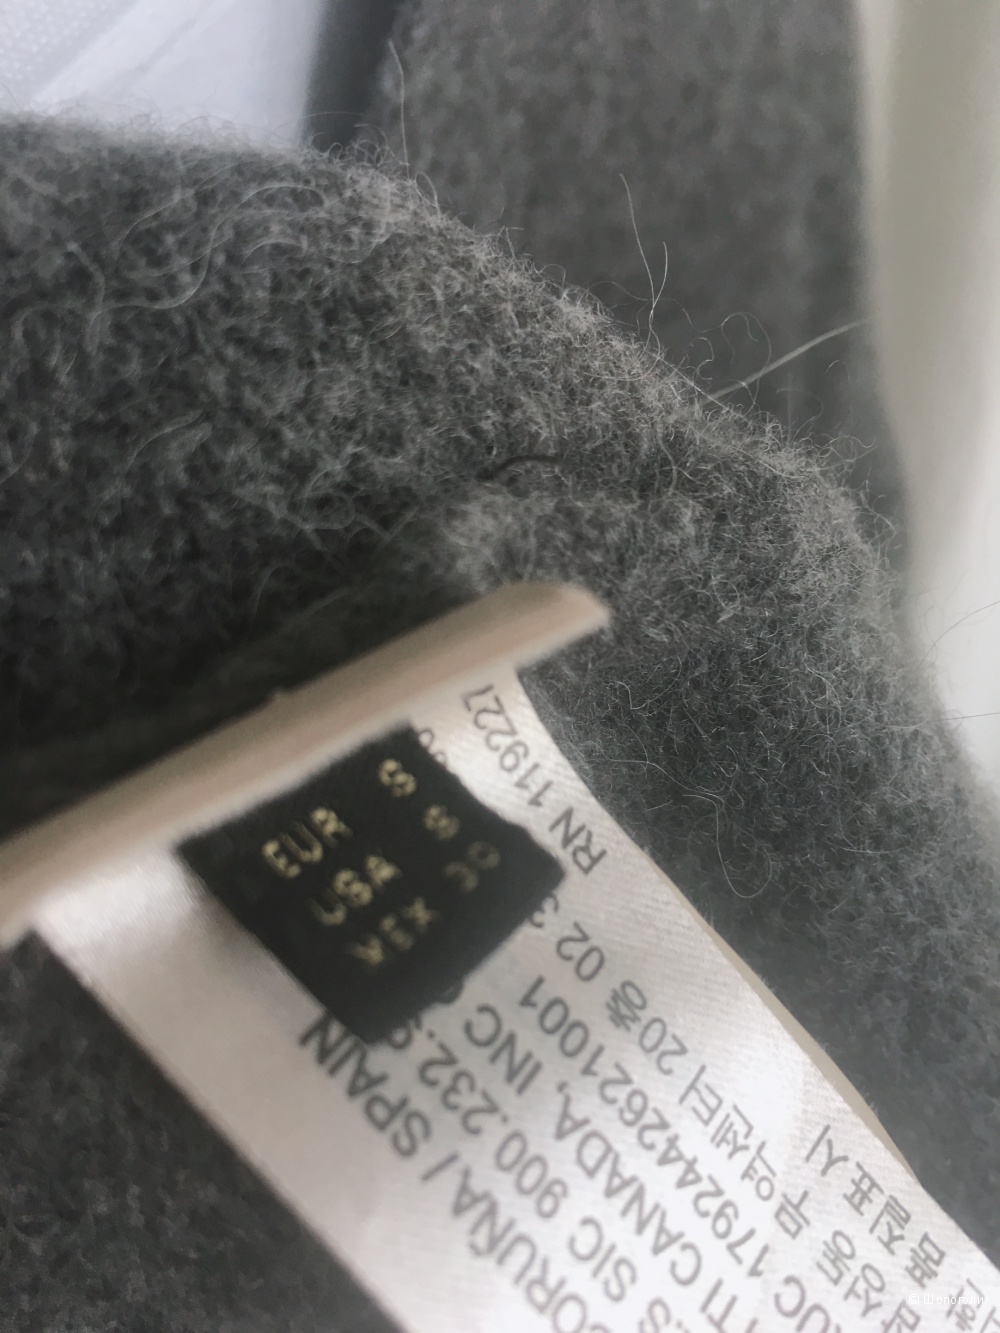 Пуловер Massimo Dutti. Размер S.